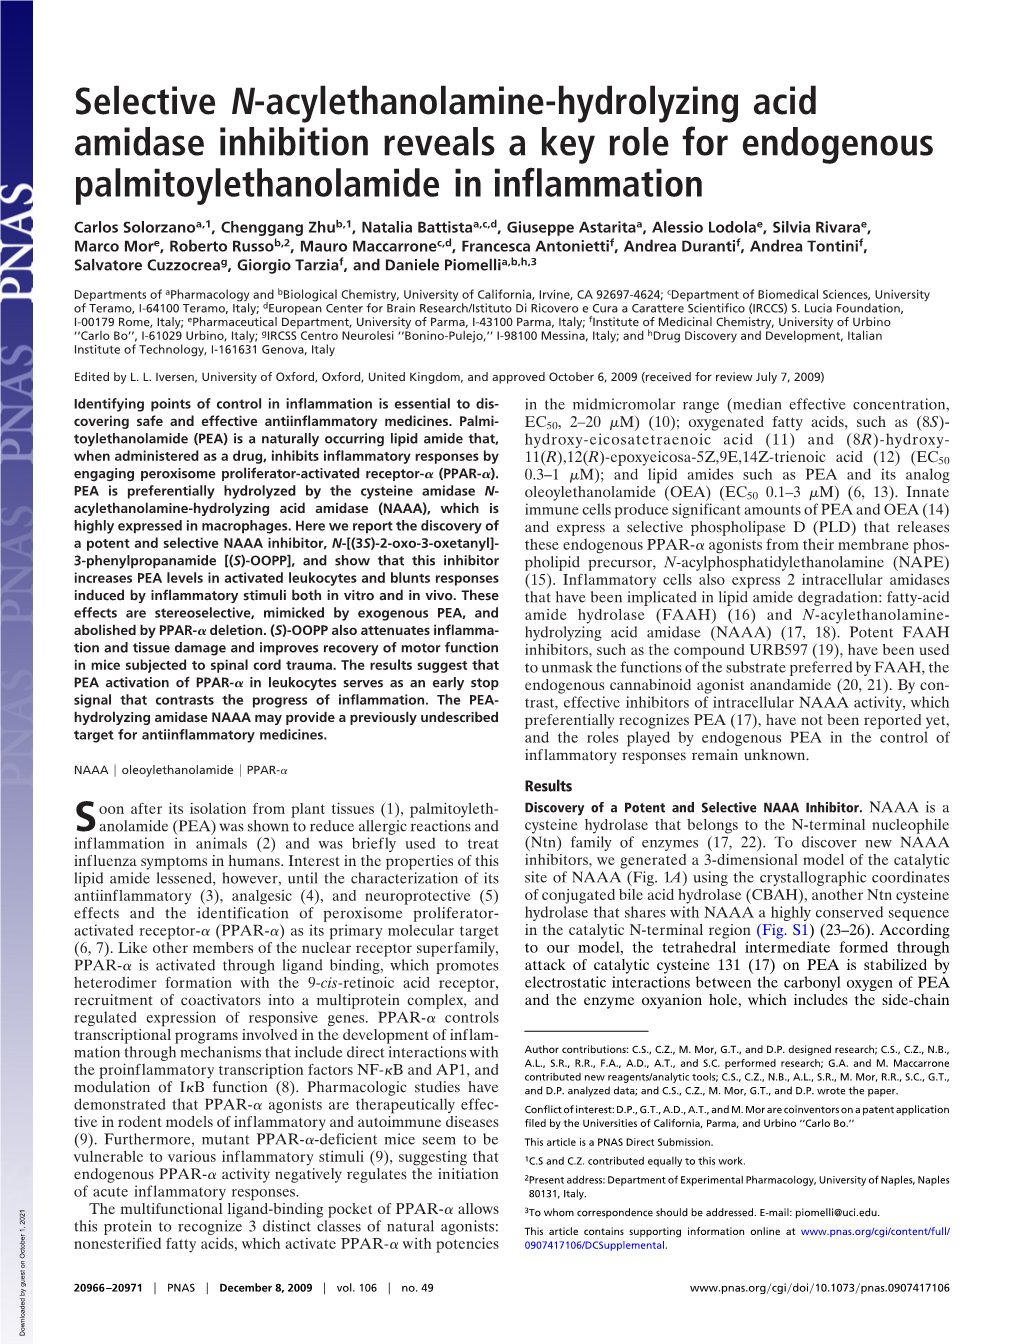 Selective N-Acylethanolamine-Hydrolyzing Acid Amidase Inhibition Reveals a Key Role for Endogenous Palmitoylethanolamide in Inflammation